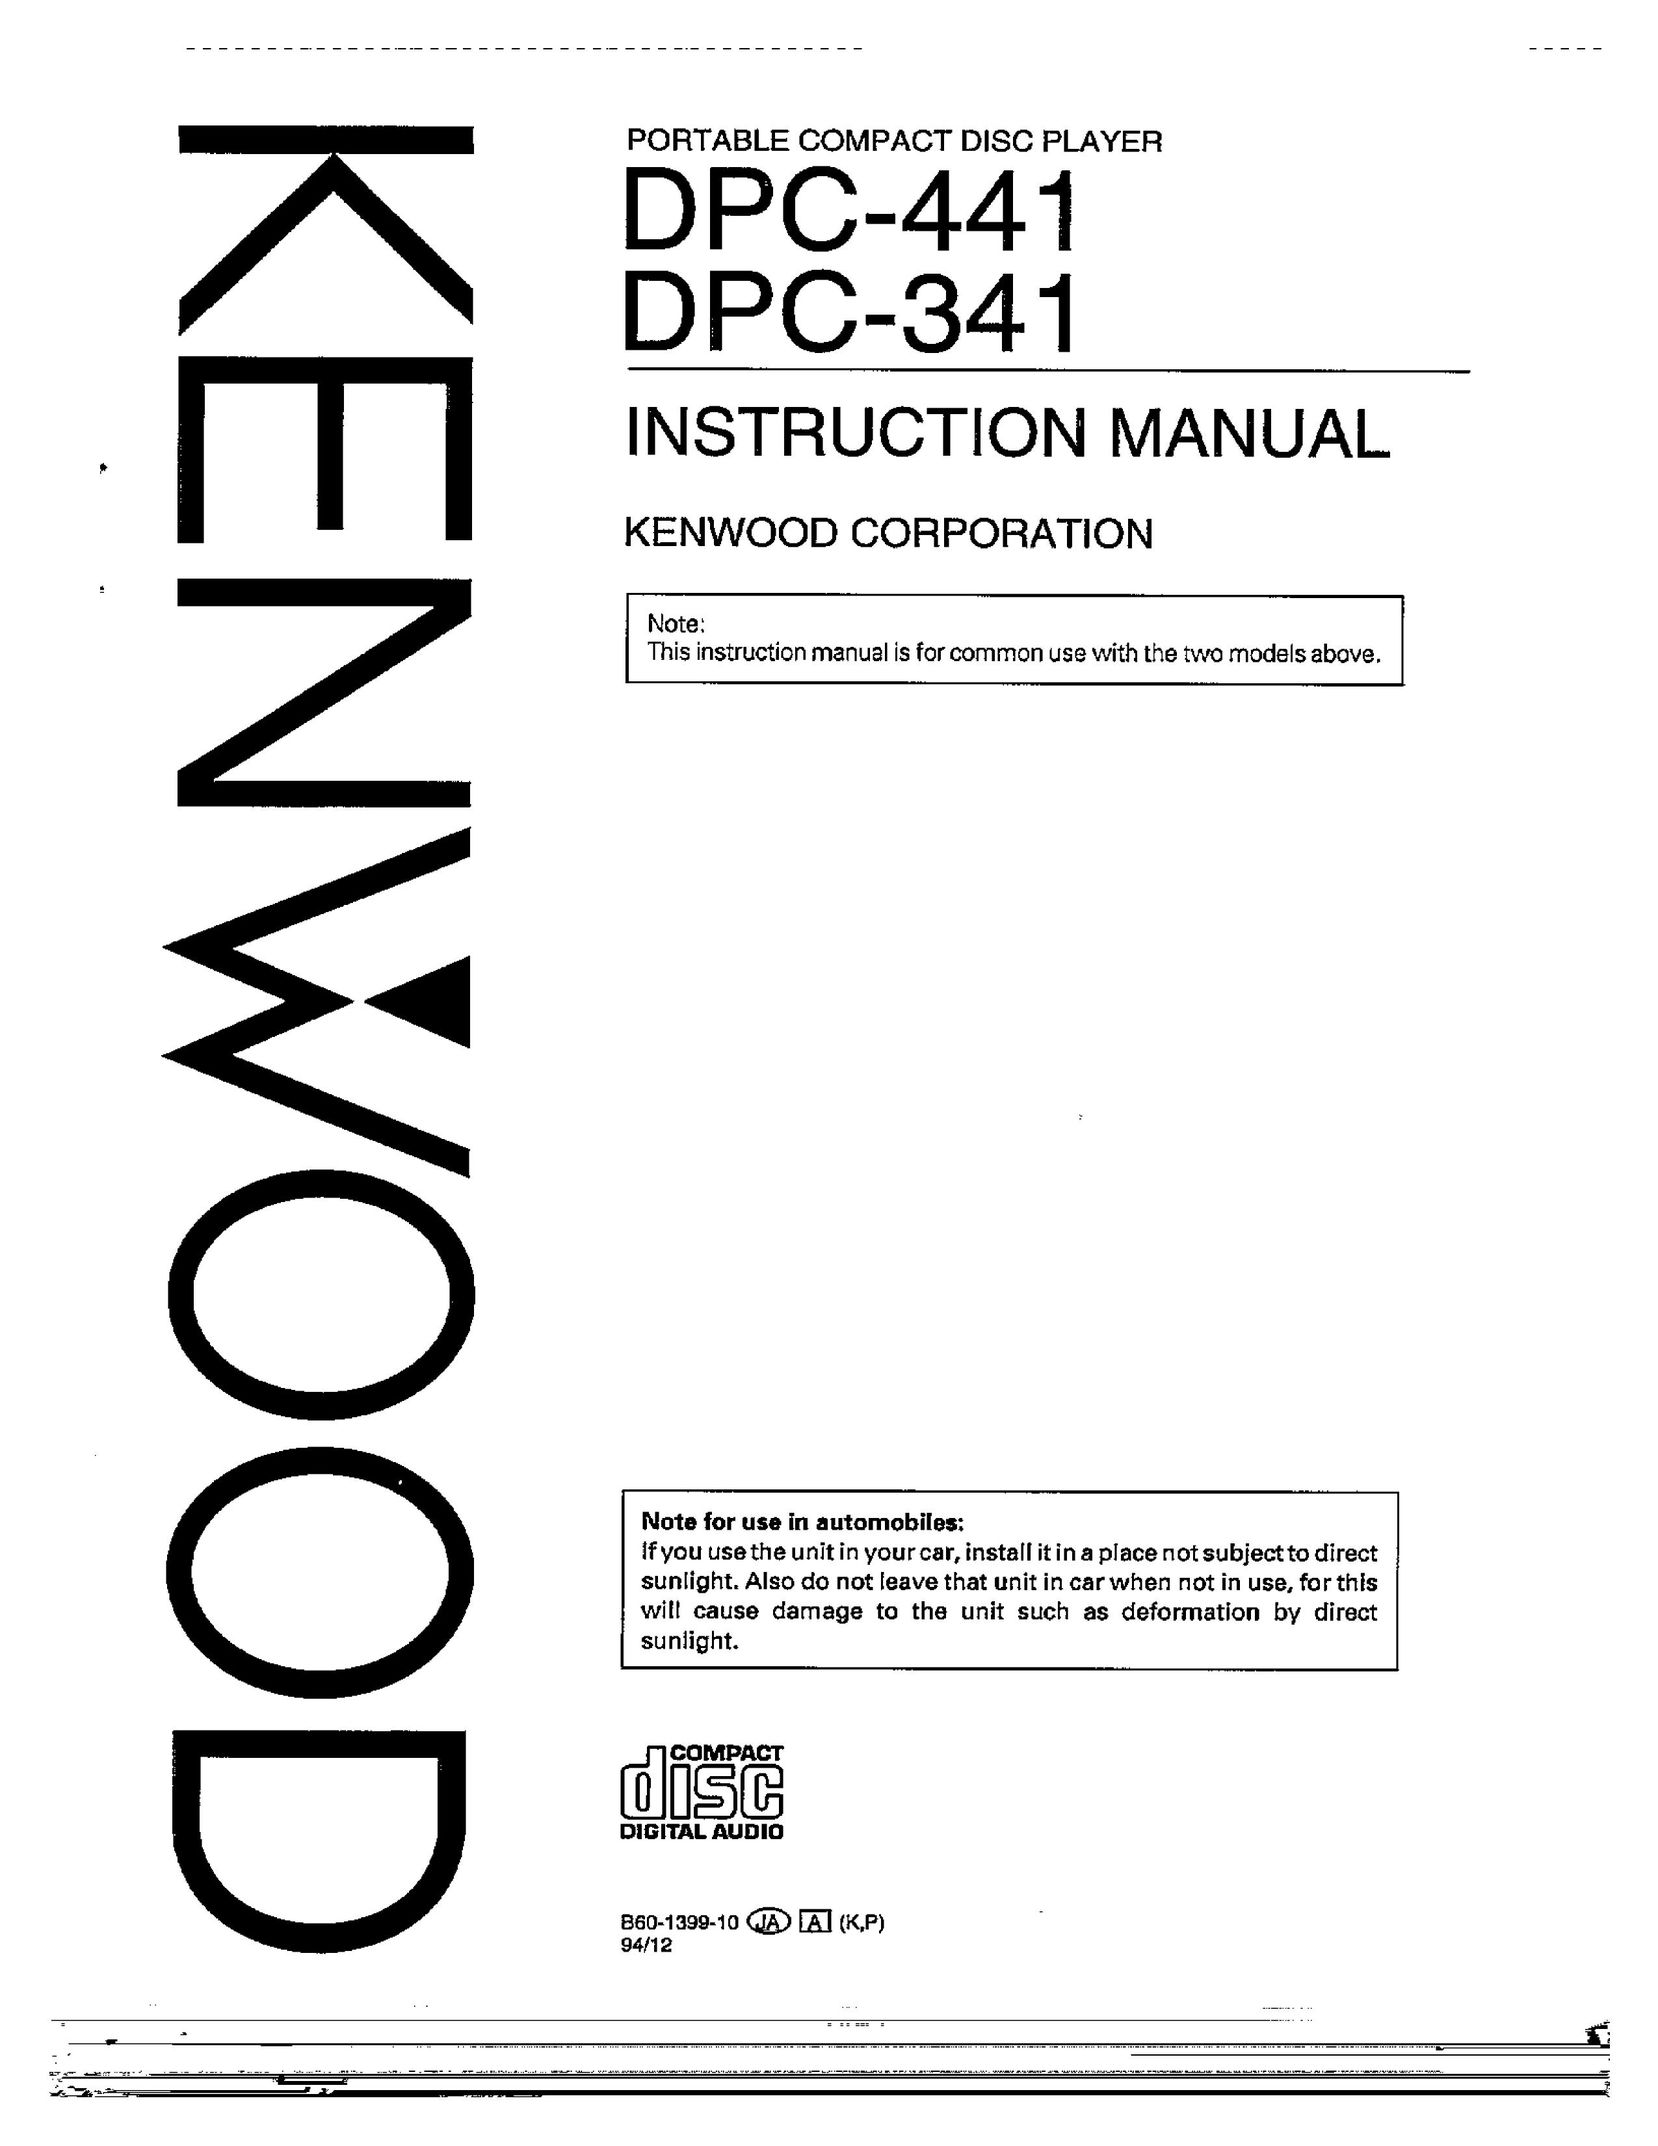 Kenwood DPC-341 CD Player User Manual